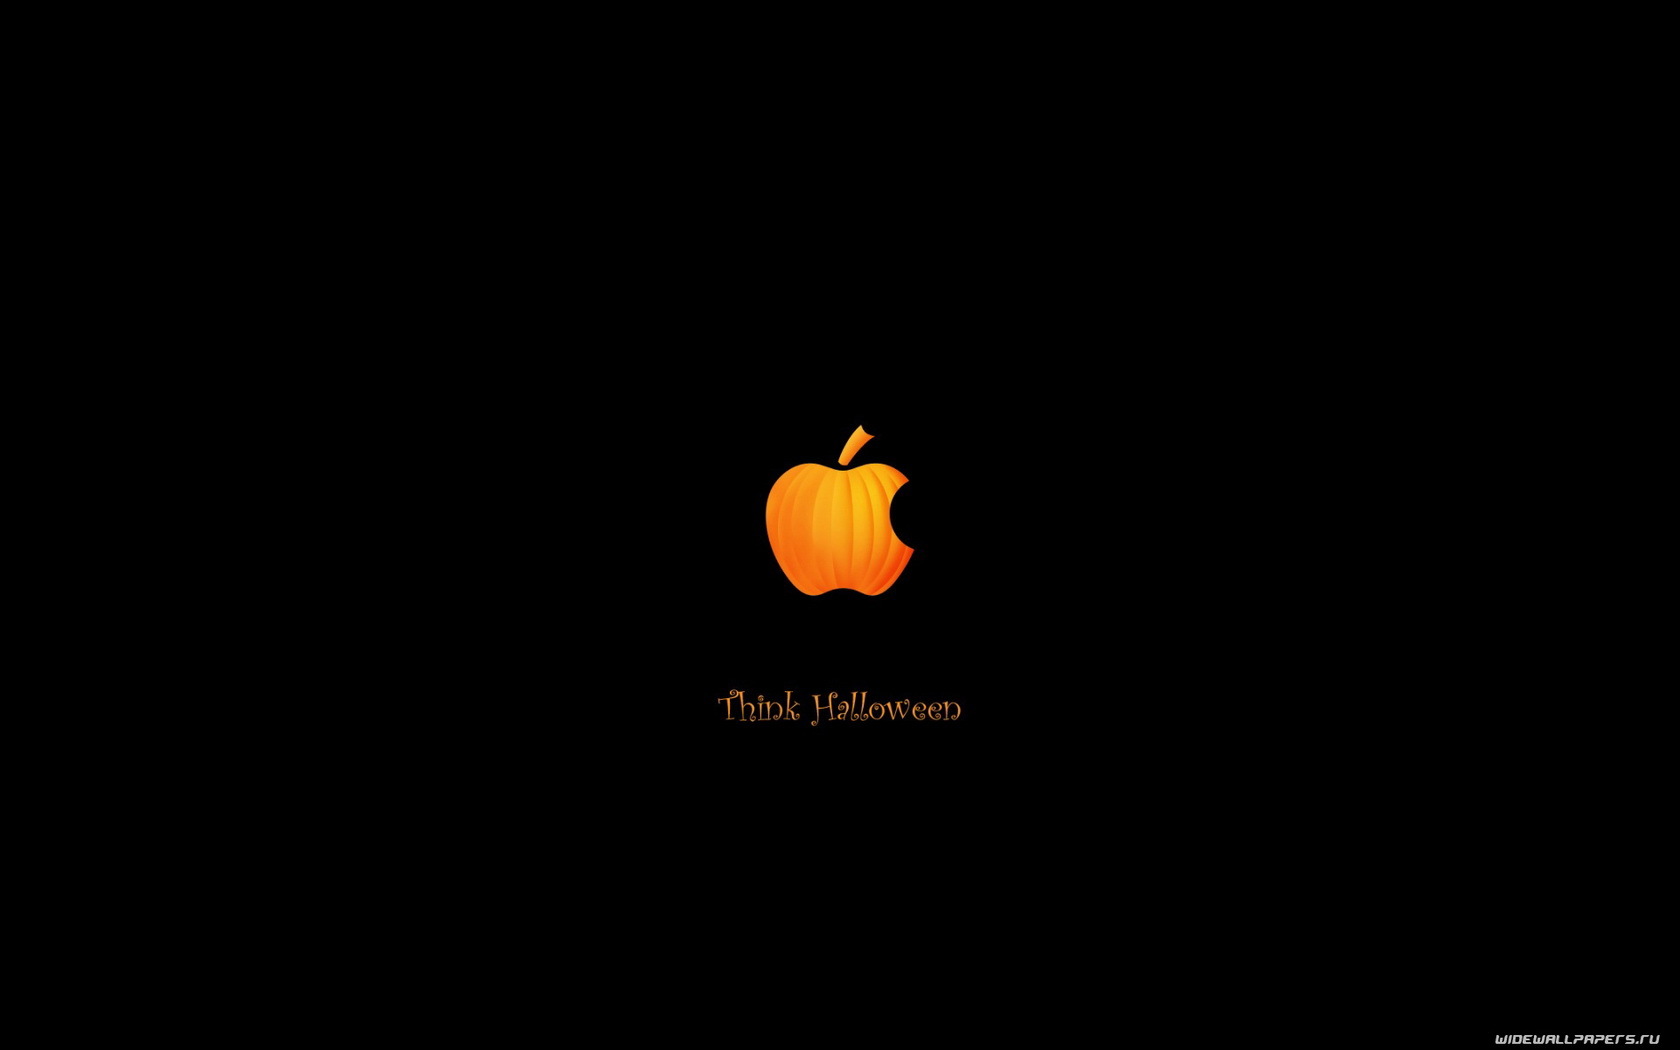 Download background funny, brands, holidays, logos, apple, halloween, black